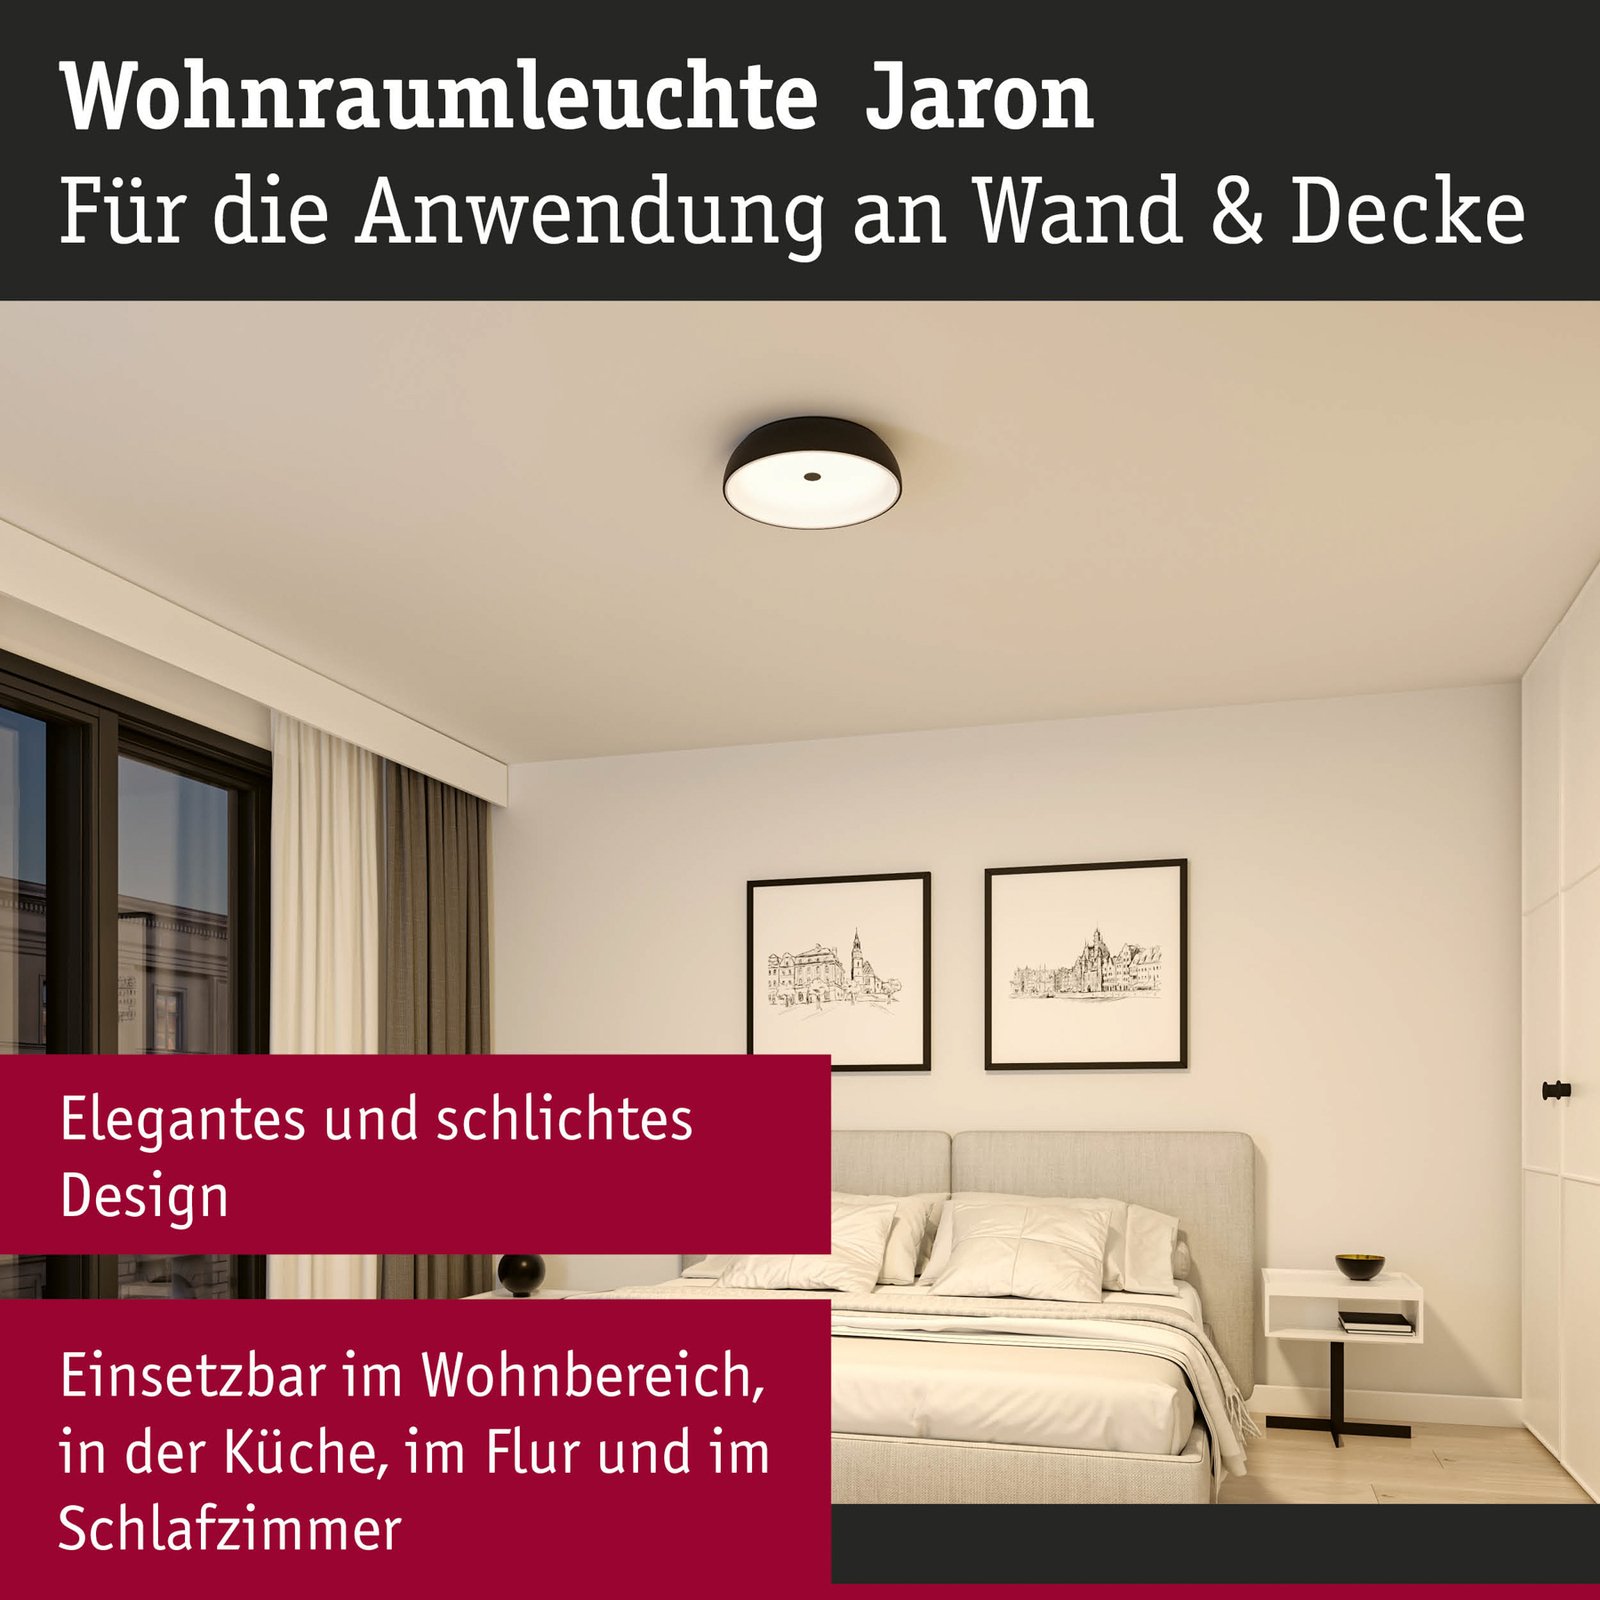 Paulmann Jaron LED ceiling lamp 3-level dim, black